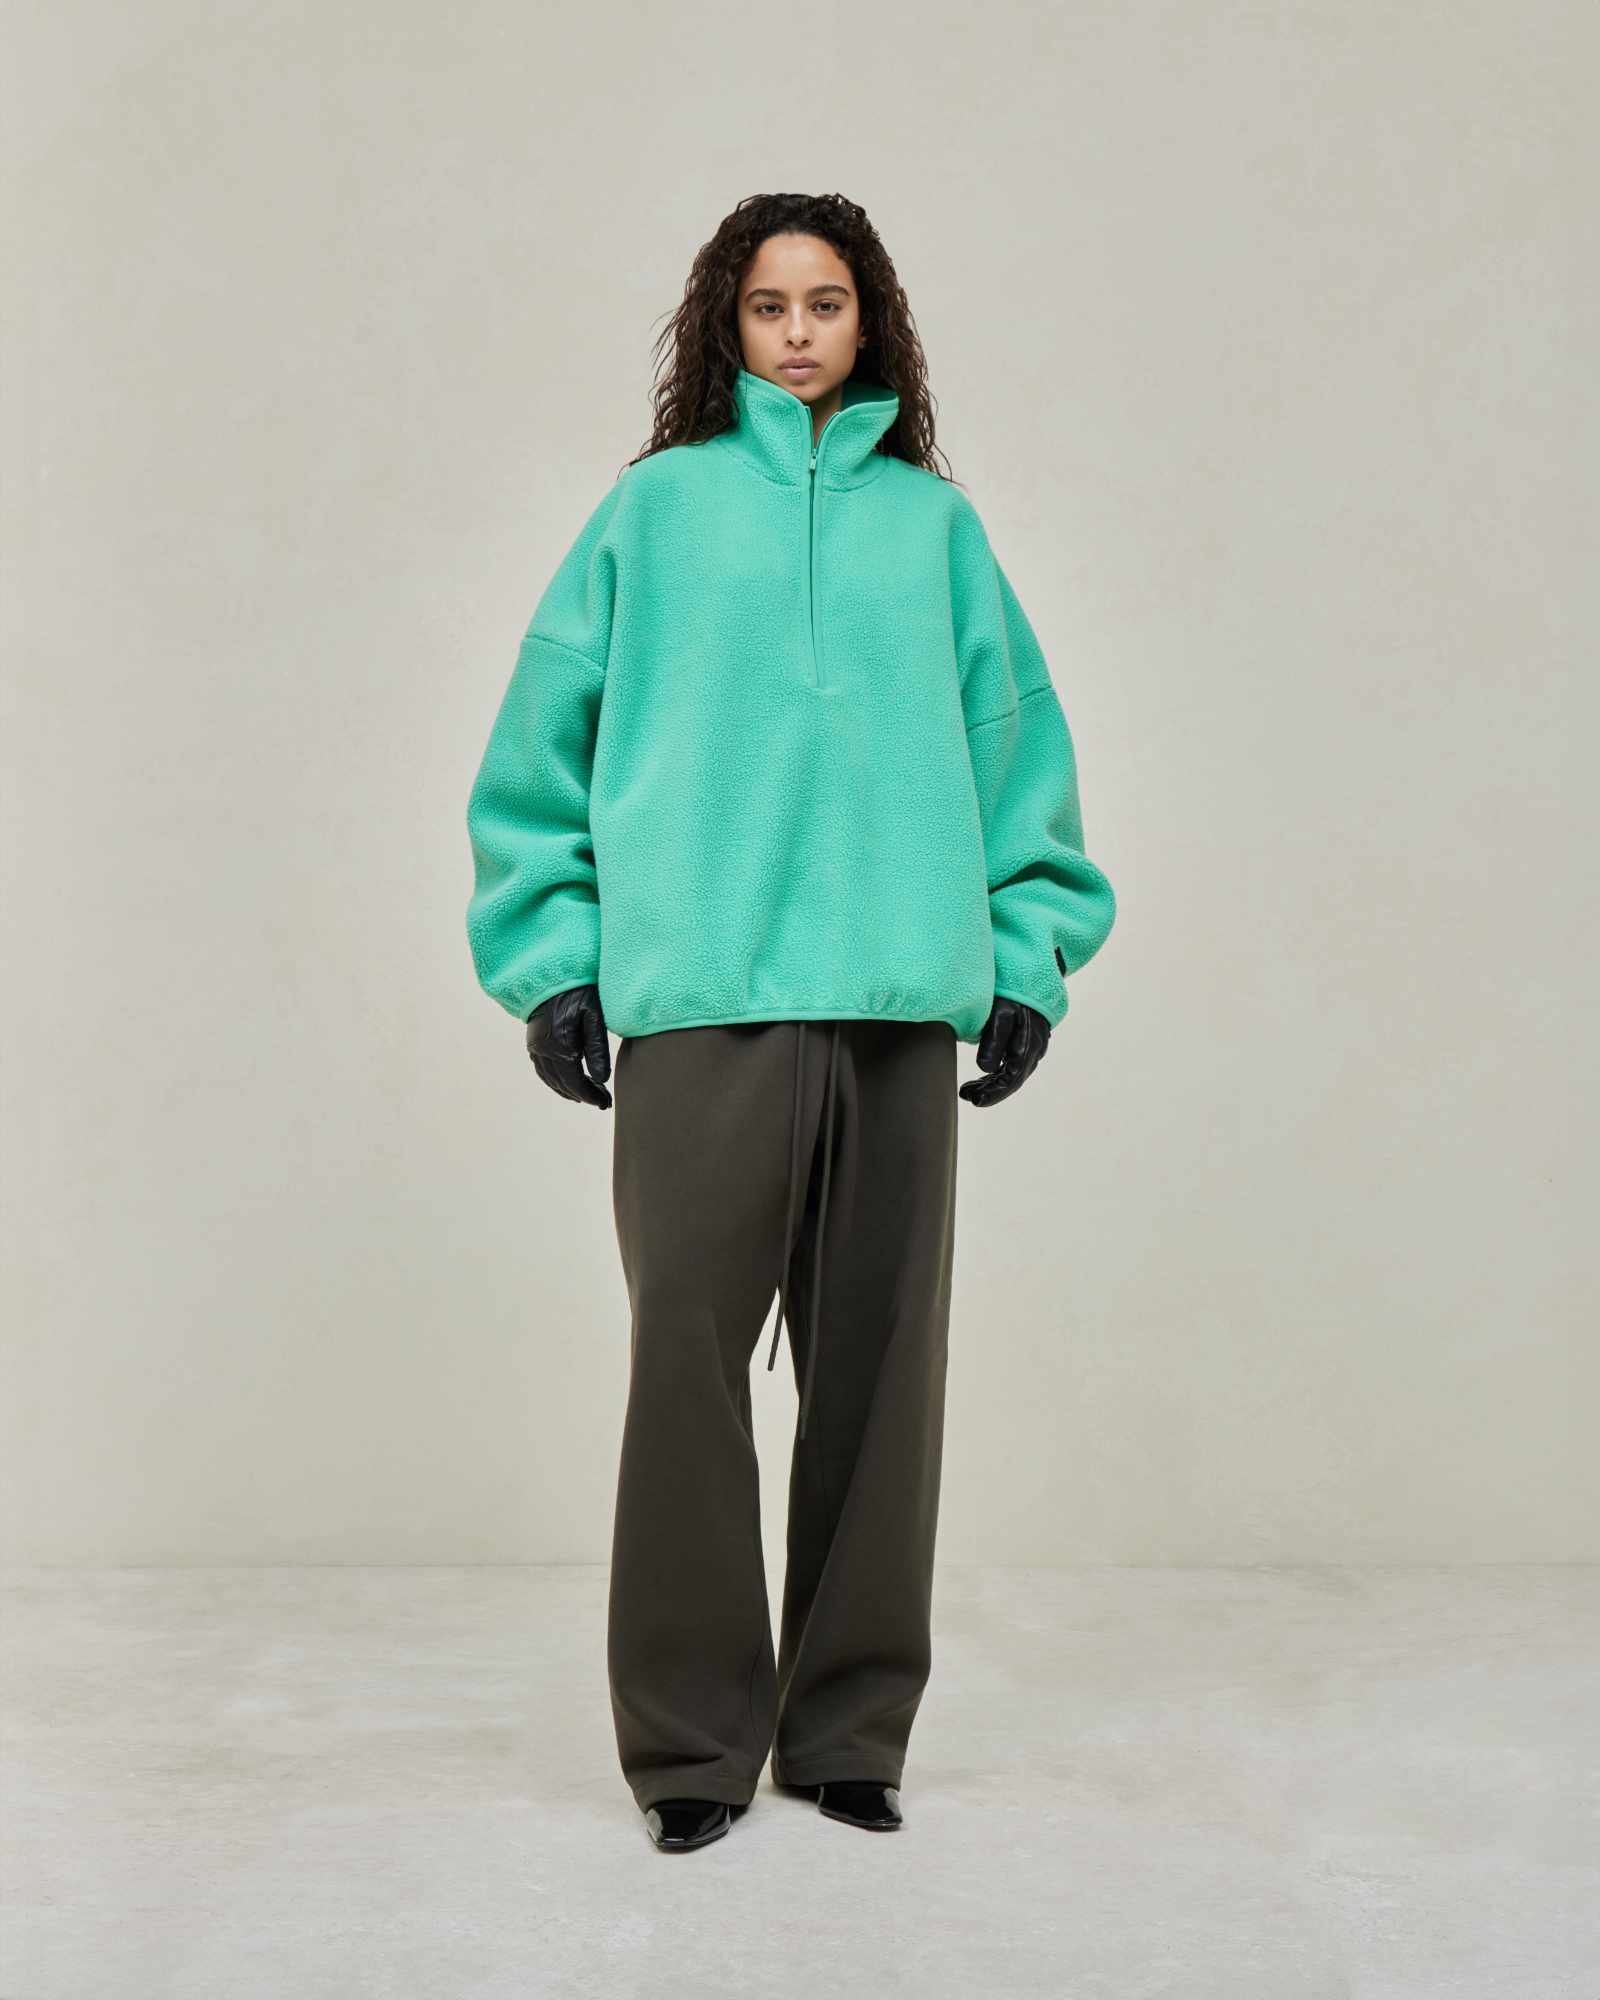 Models wear Fear of God ESSENTIALS' Winter 2023 hoodies, sweatshirts, t-shirts, and sweatpants